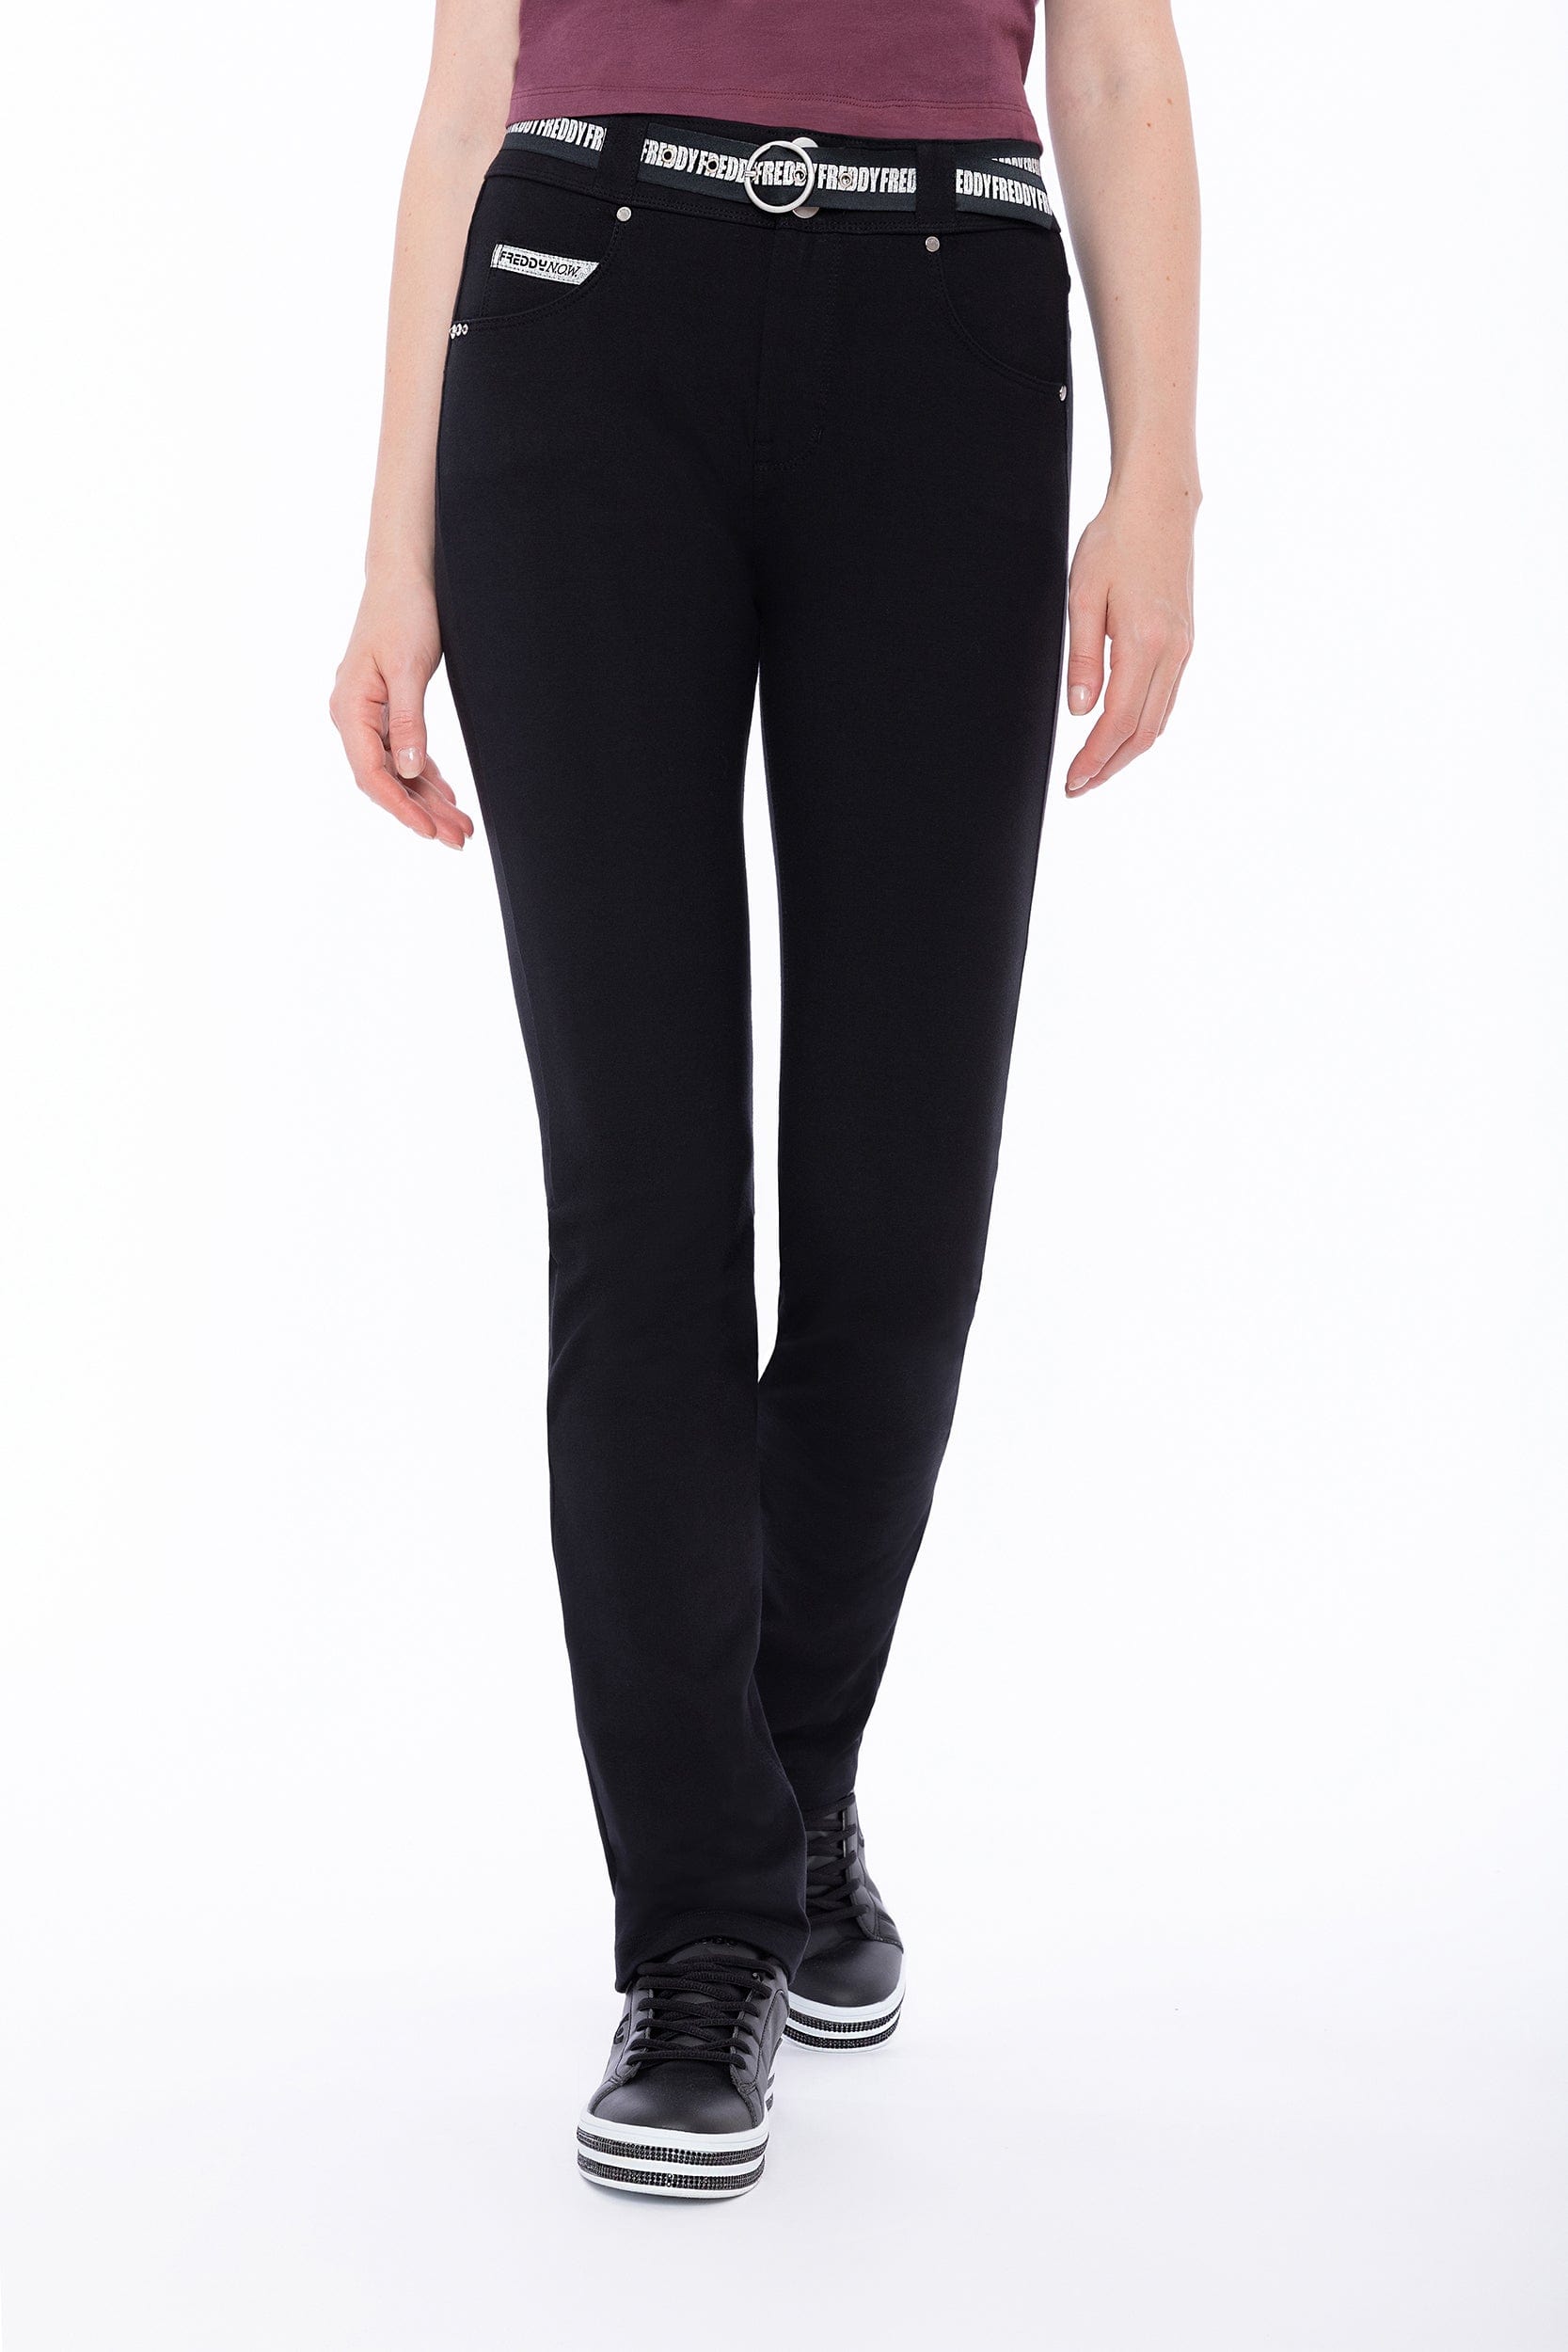 N.O.W.® Fashion Straight Leg - Mid Rise - Full Length - Black 2